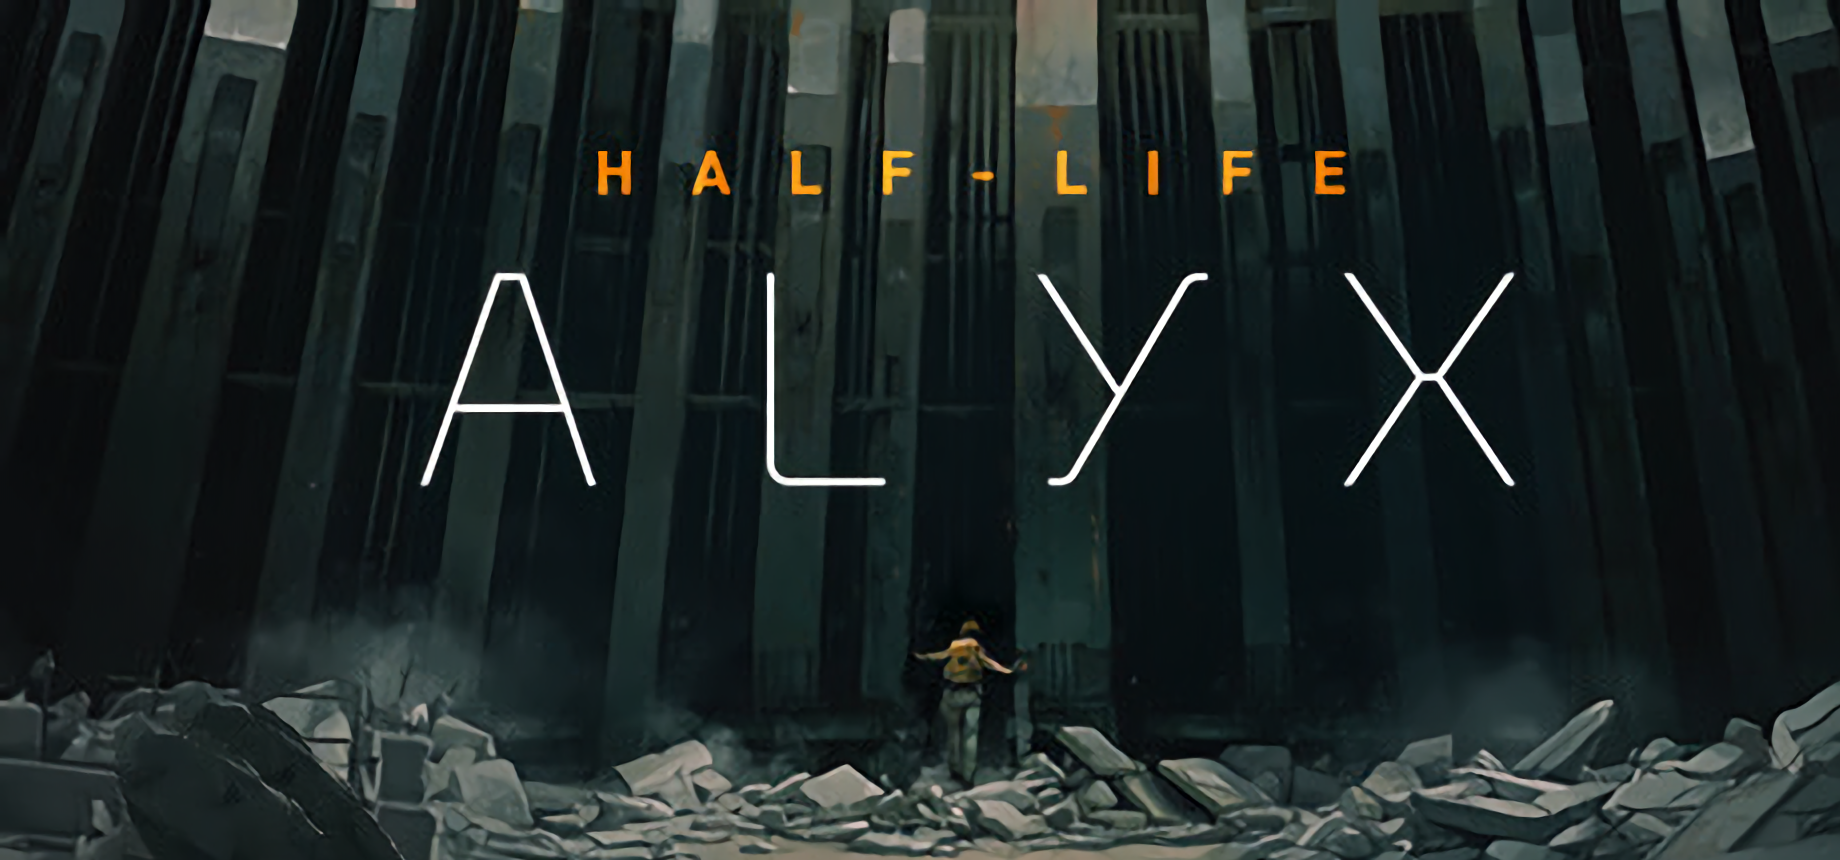 half life alyx ps